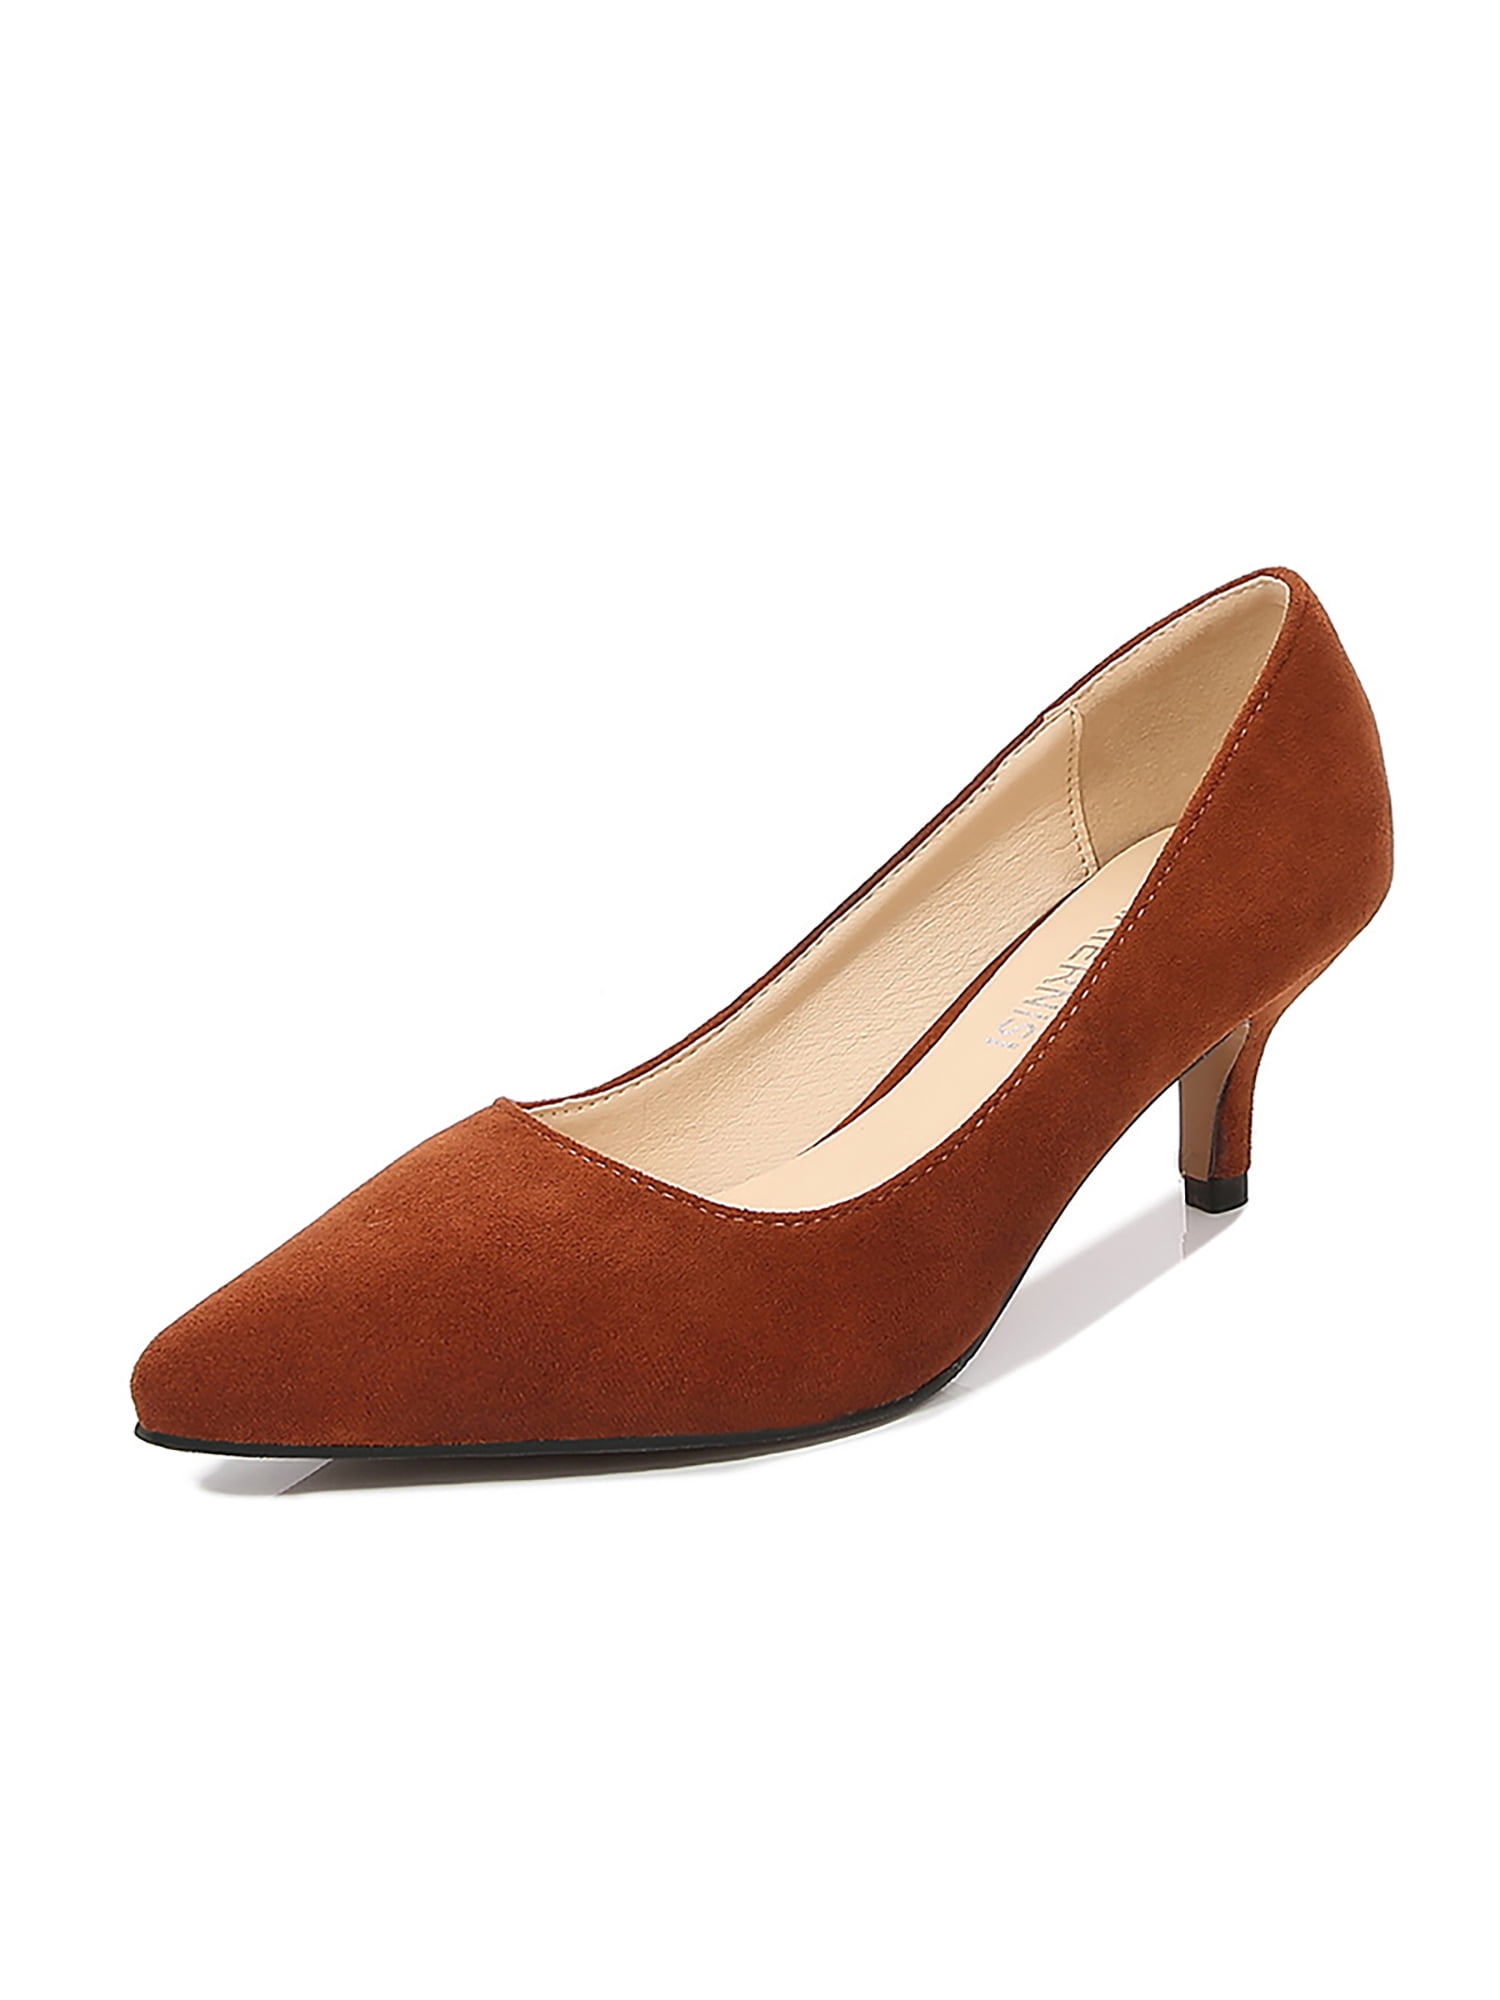 WOMENS SIZE 6 Brown Leather Debenhams Lotus Low Heel Open Peep Toe Court  Shoes £17.99 - PicClick UK